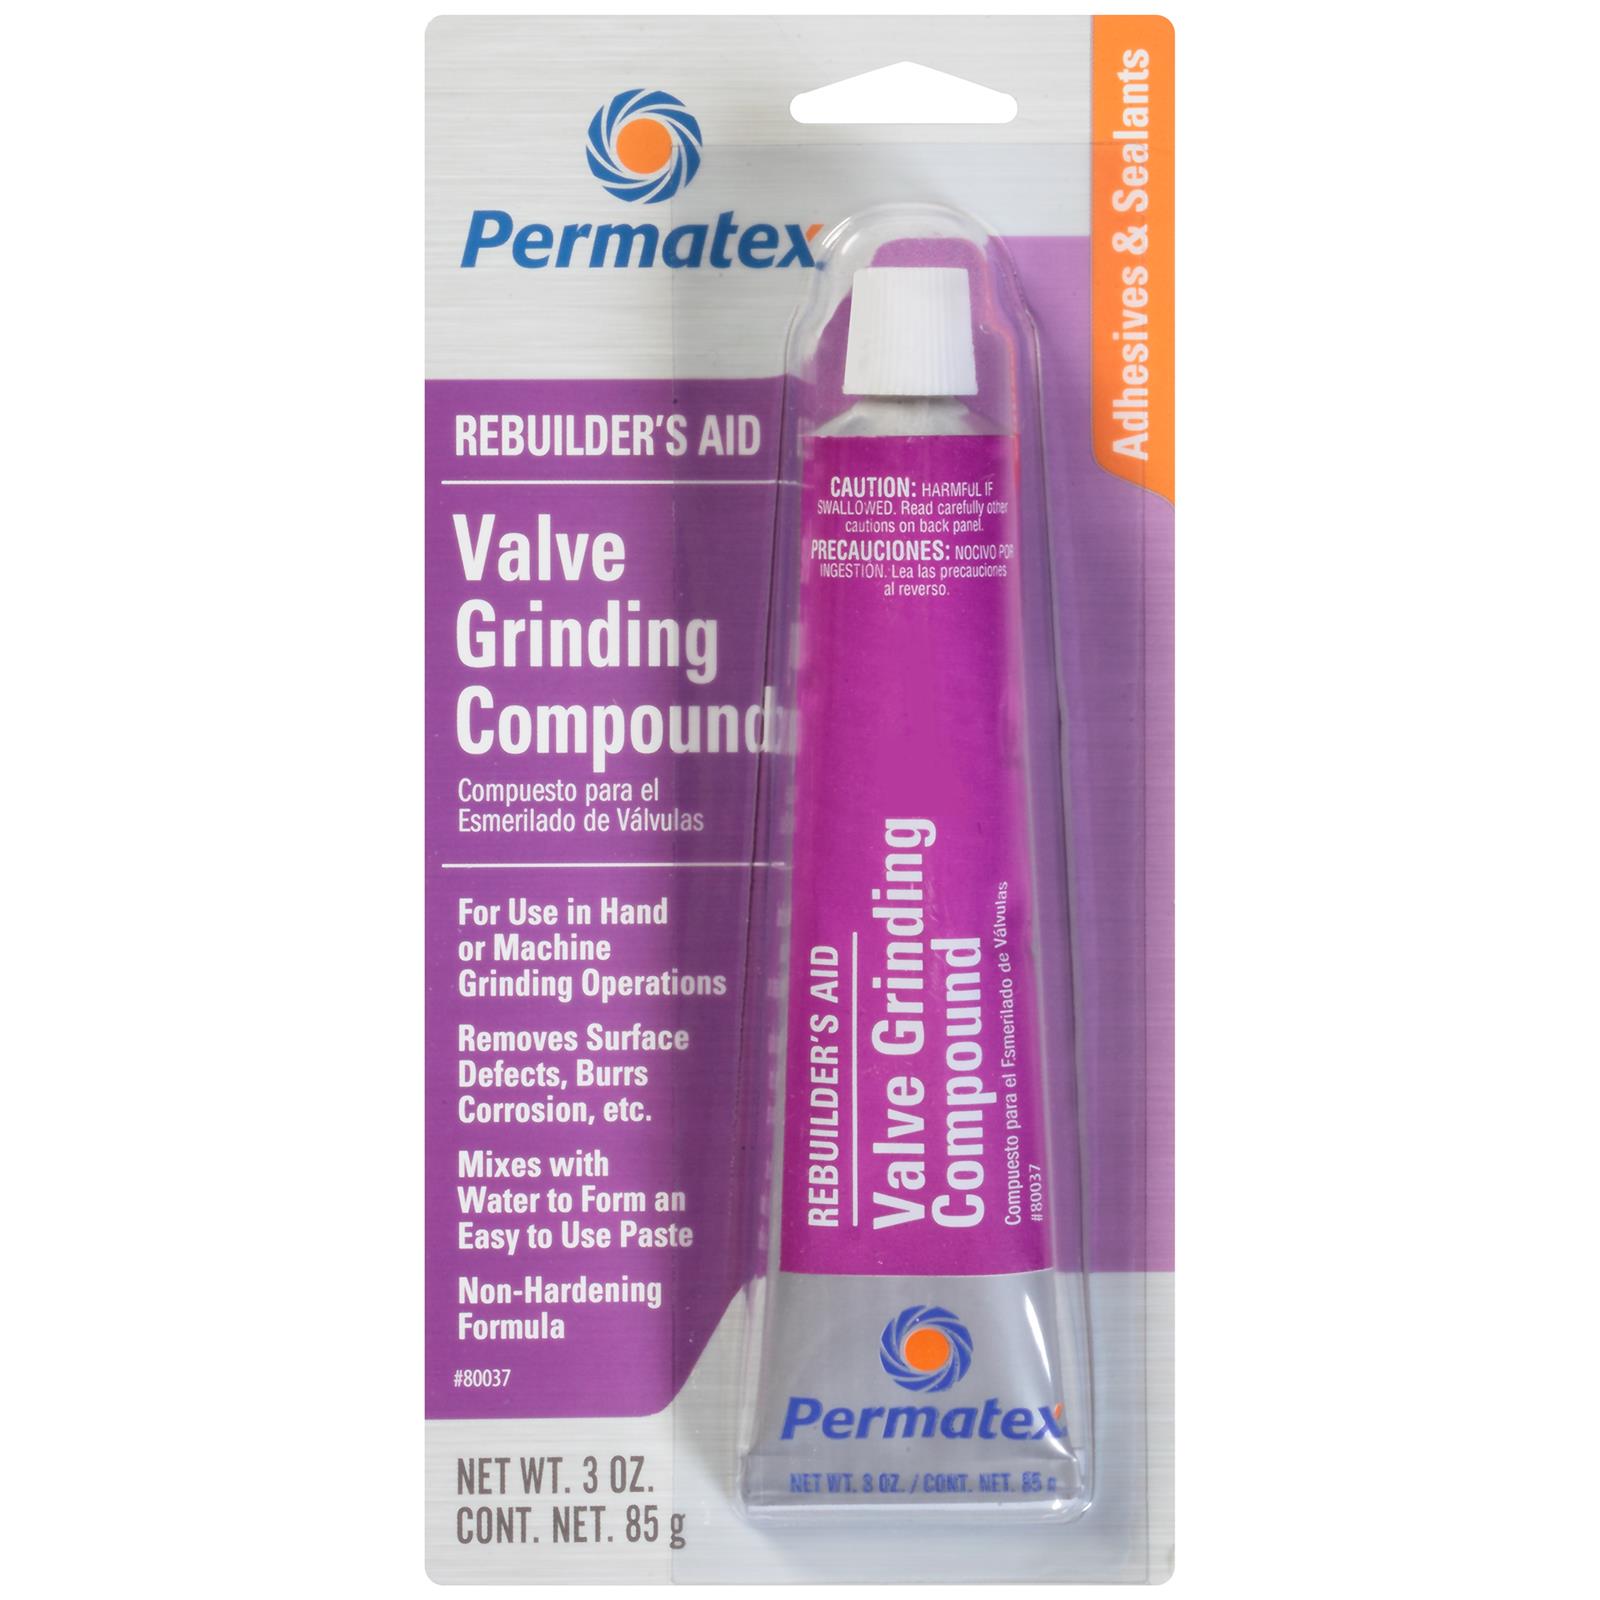 Permatex valve grinding compound #80037